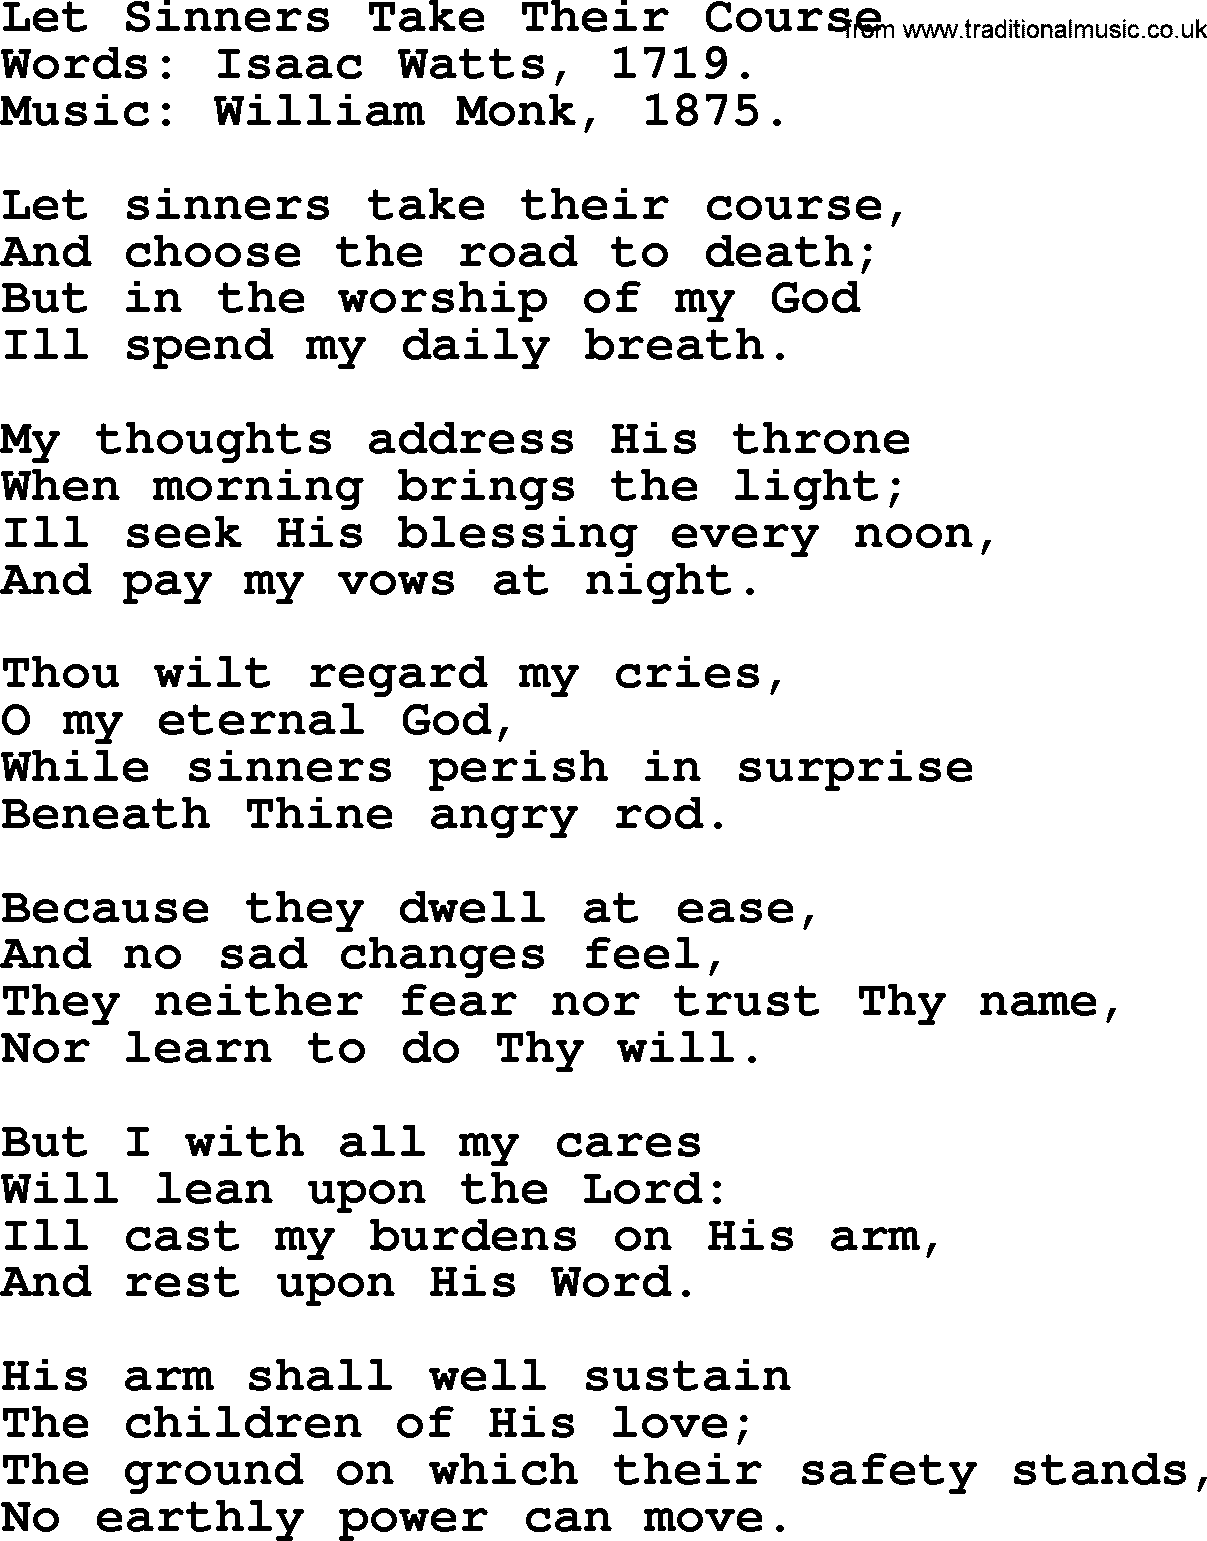 Isaac Watts Christian hymn: Let Sinners Take Their Course- lyricss